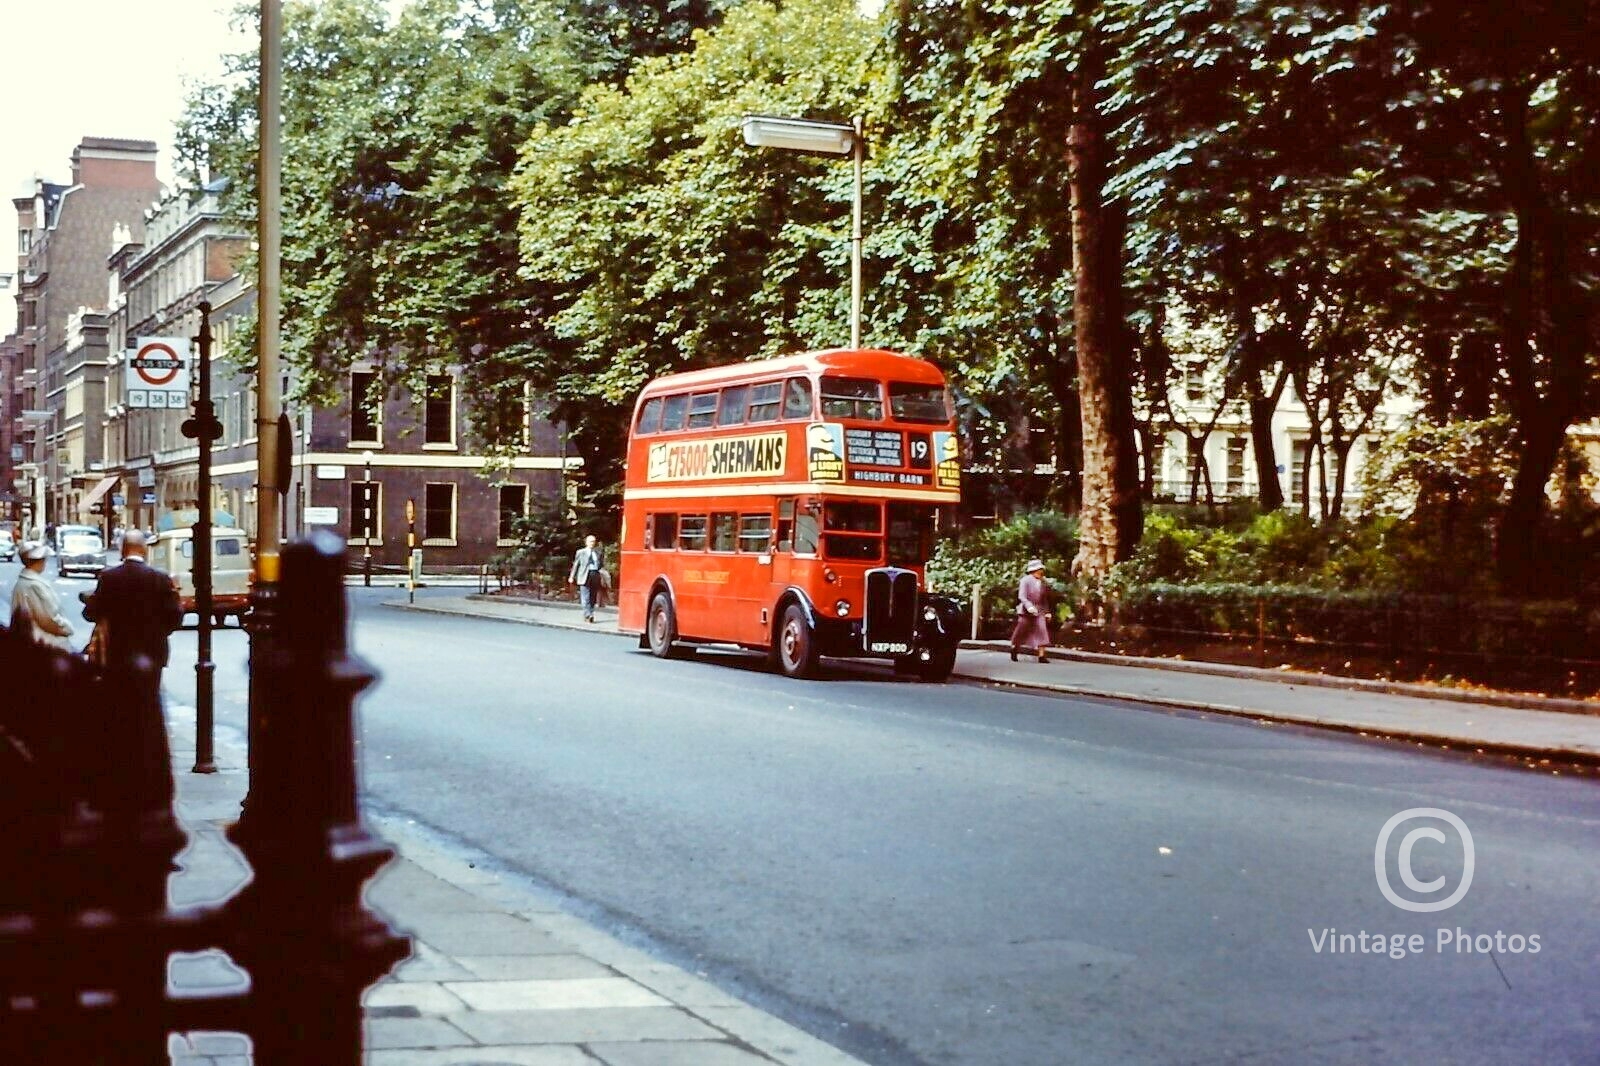 1950s Bloomsbury Square LT 19 Bus NXP900 London